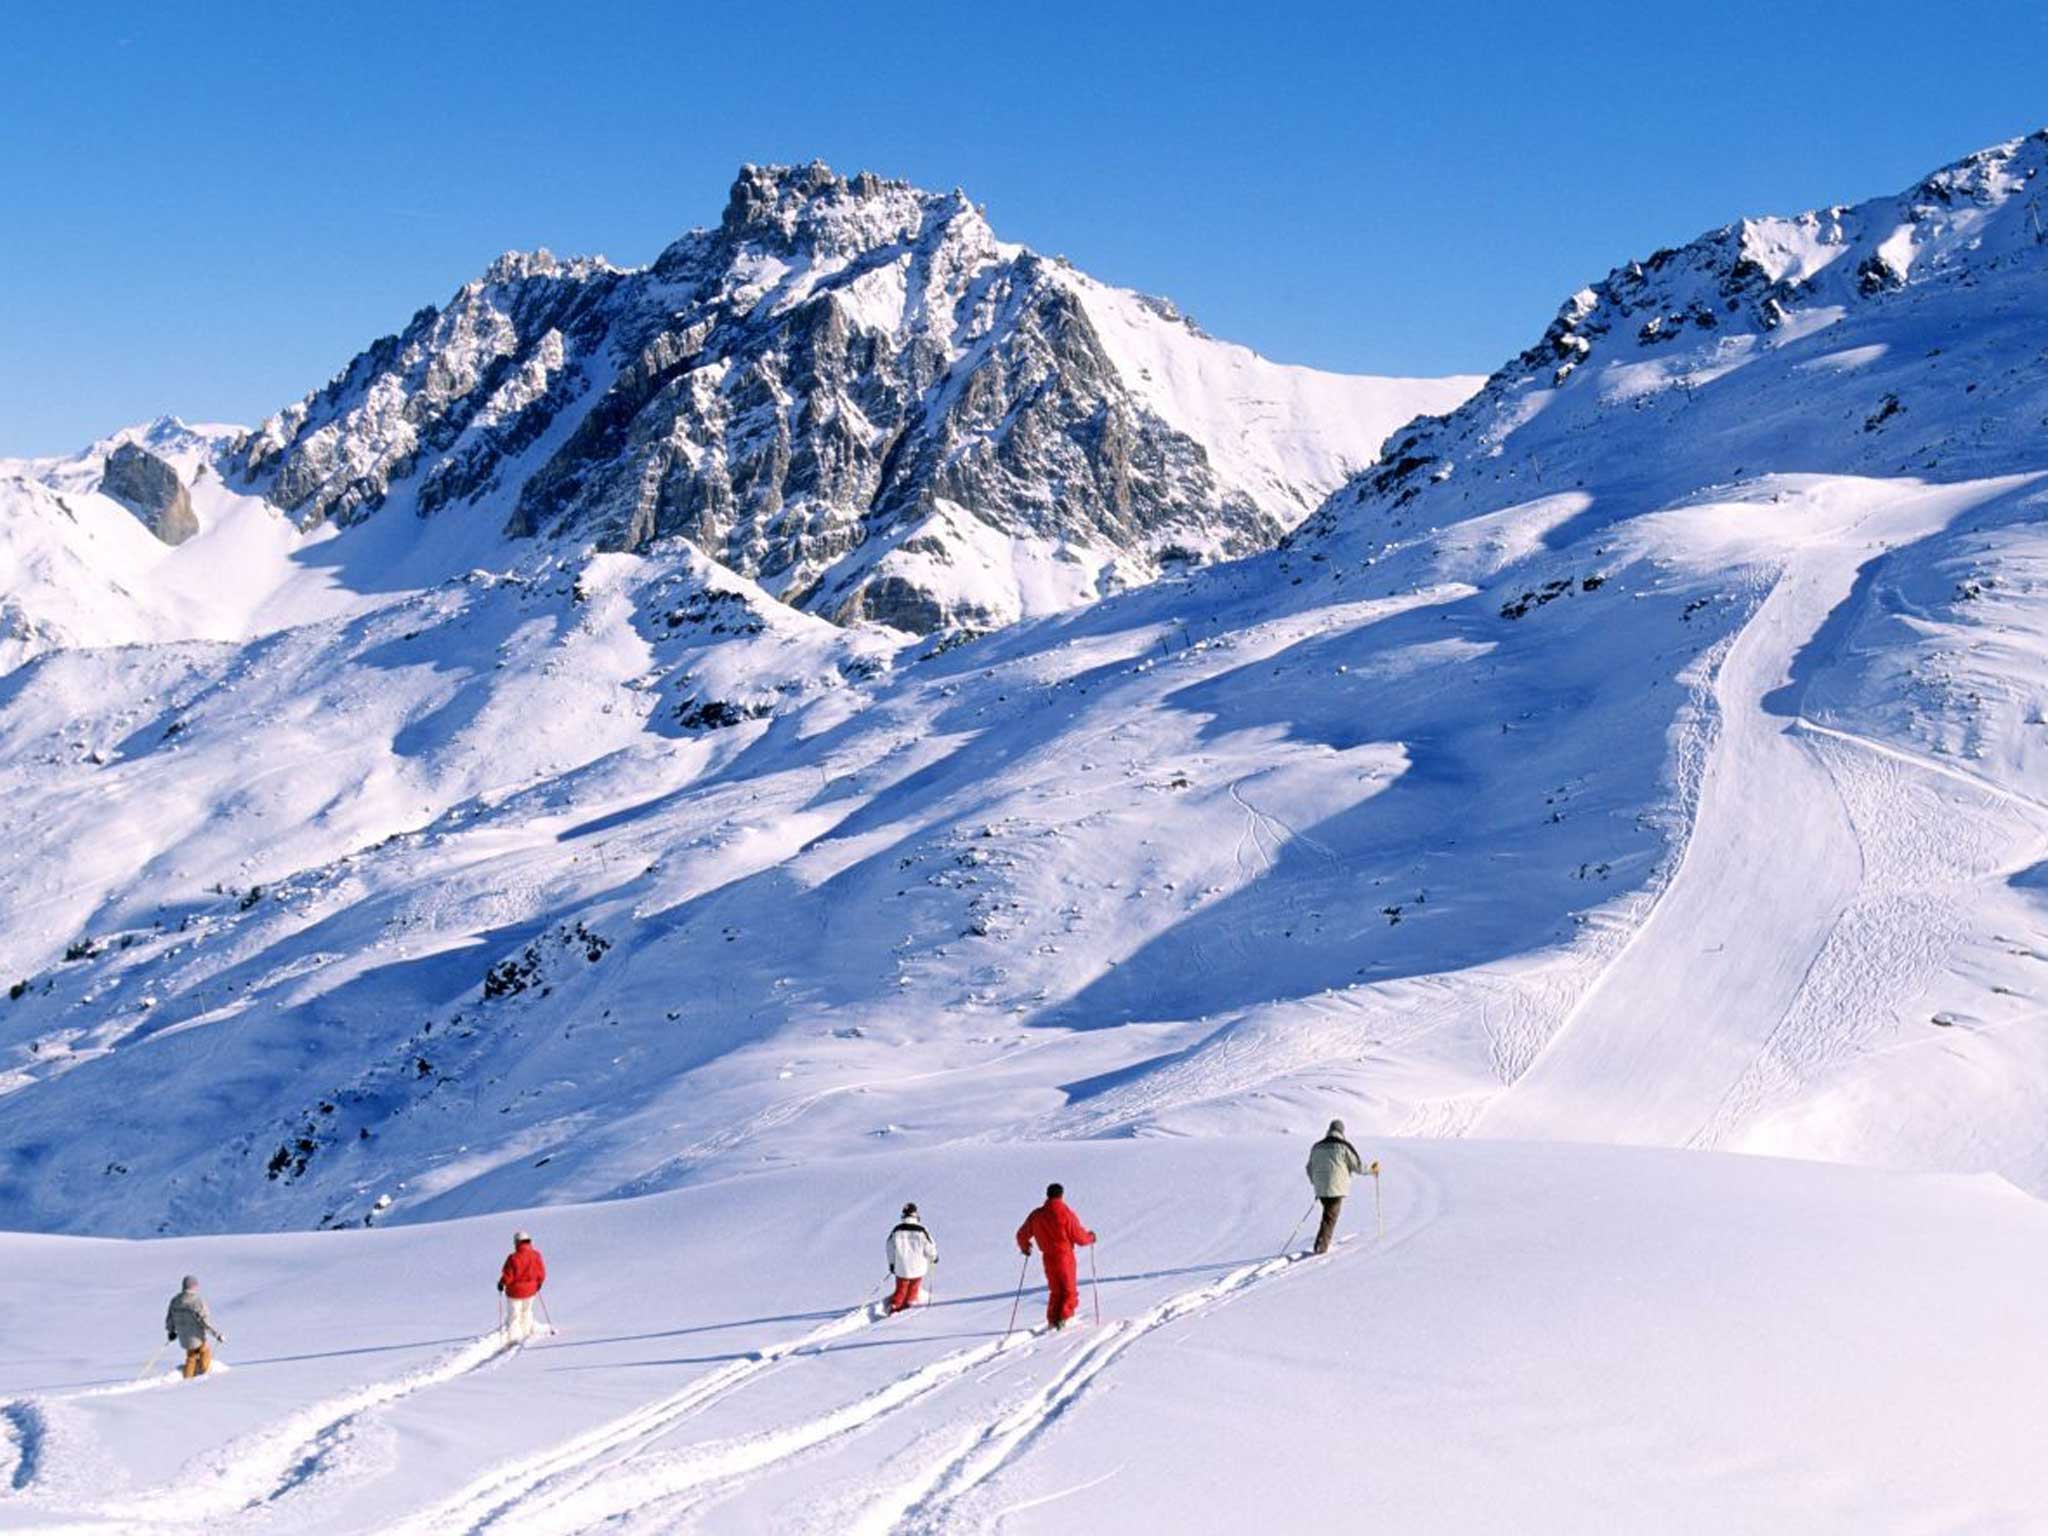 Run and jump: Skiing on fresh powder snow in Méribel